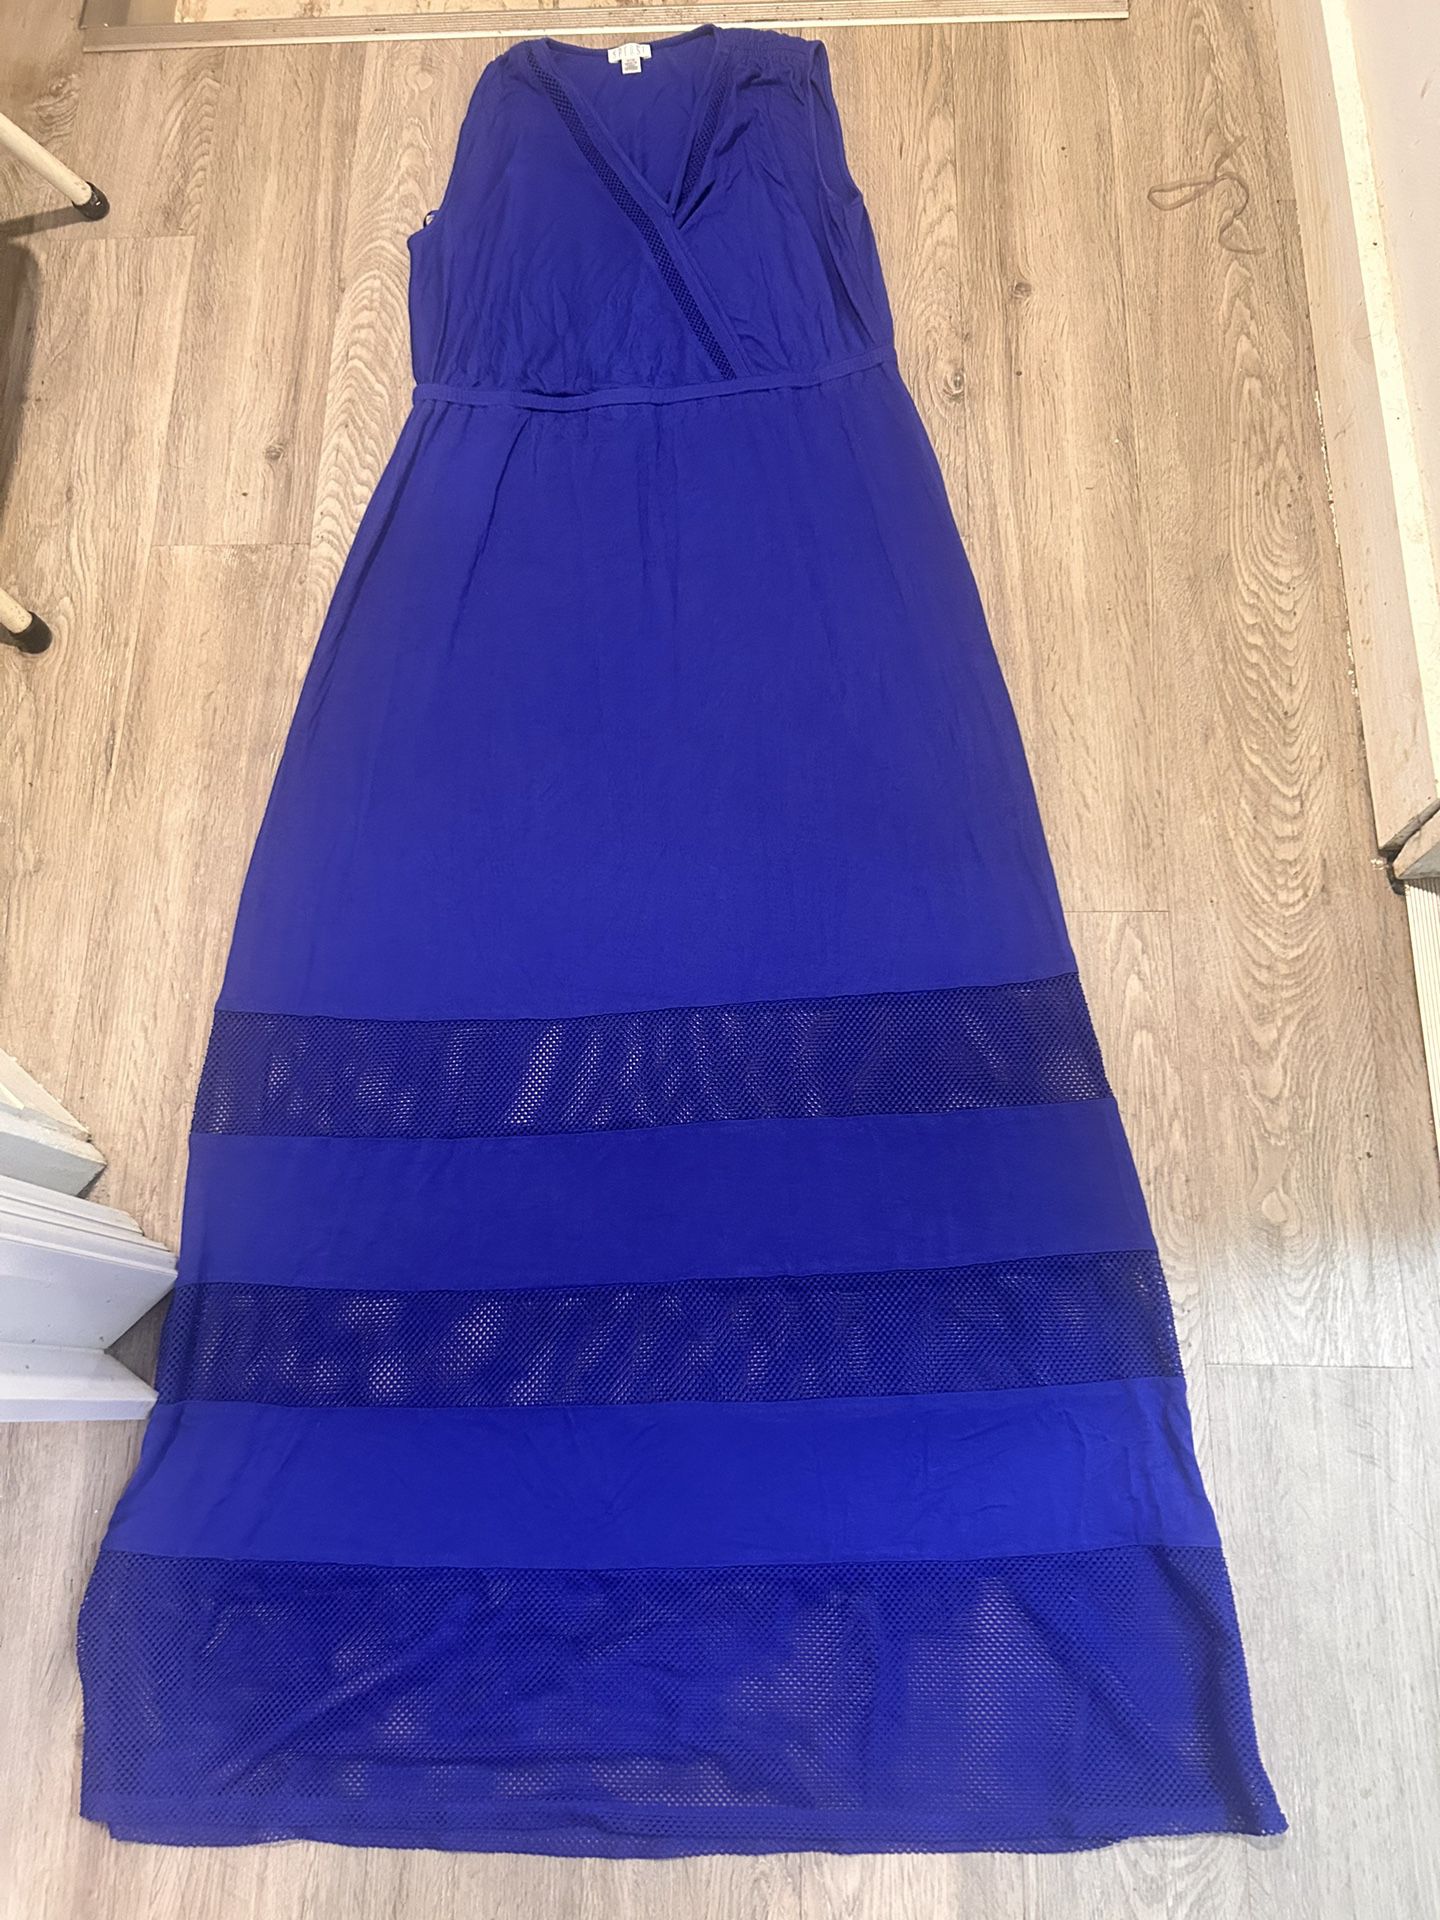 New Woman’s Royal Blue Dress